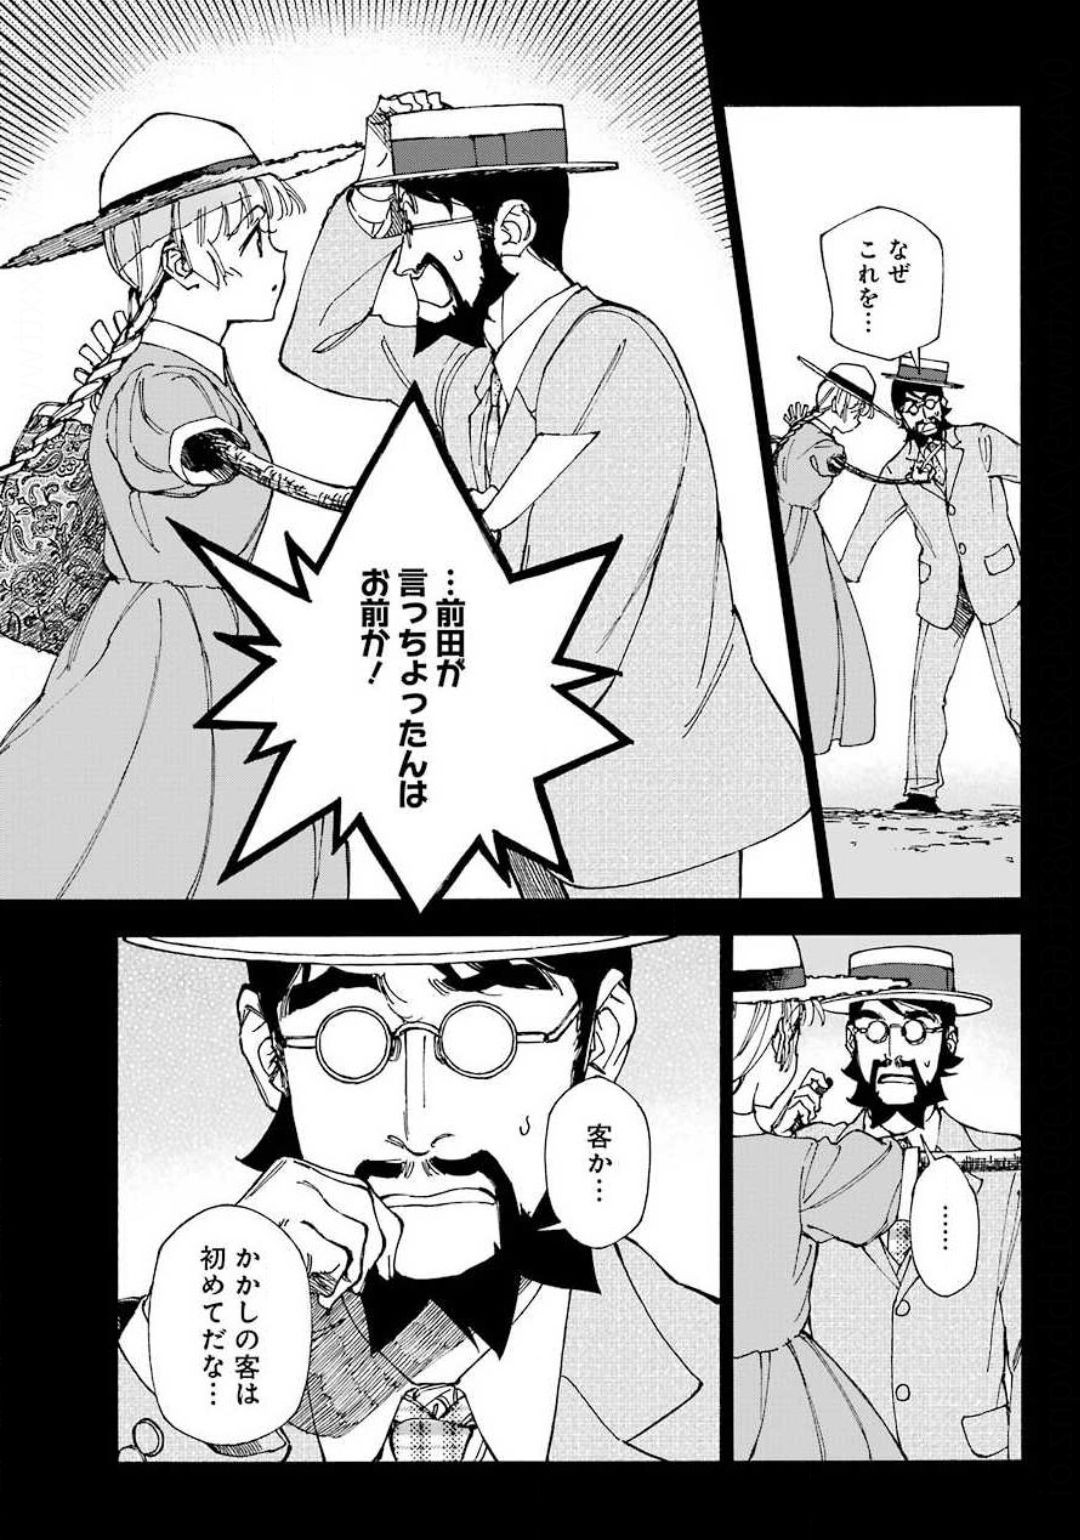 Hotomeku-kakashi - Chapter 07-1 - Page 9